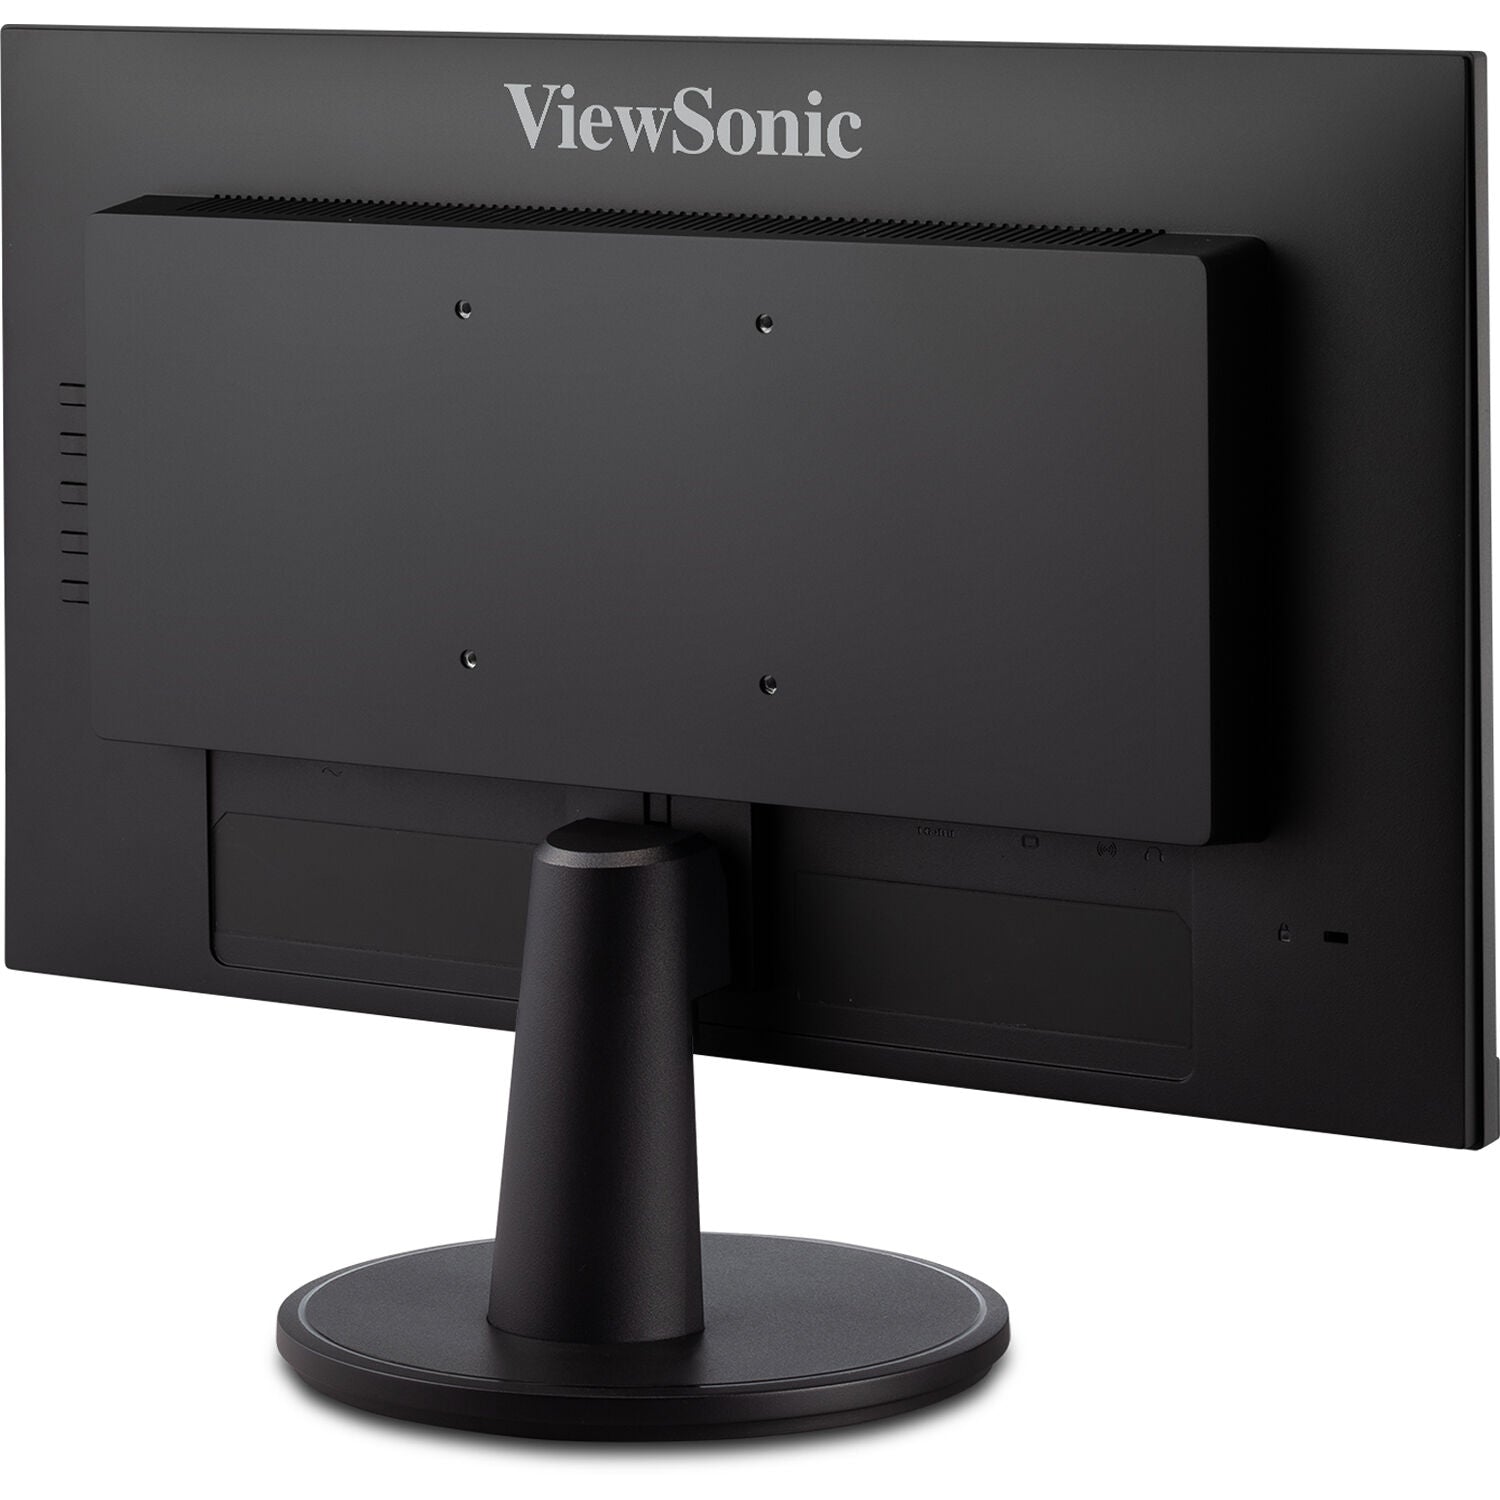 ViewSonic VS2247-MH-2-R 22" 1080p Monitor - Certified Refurbished